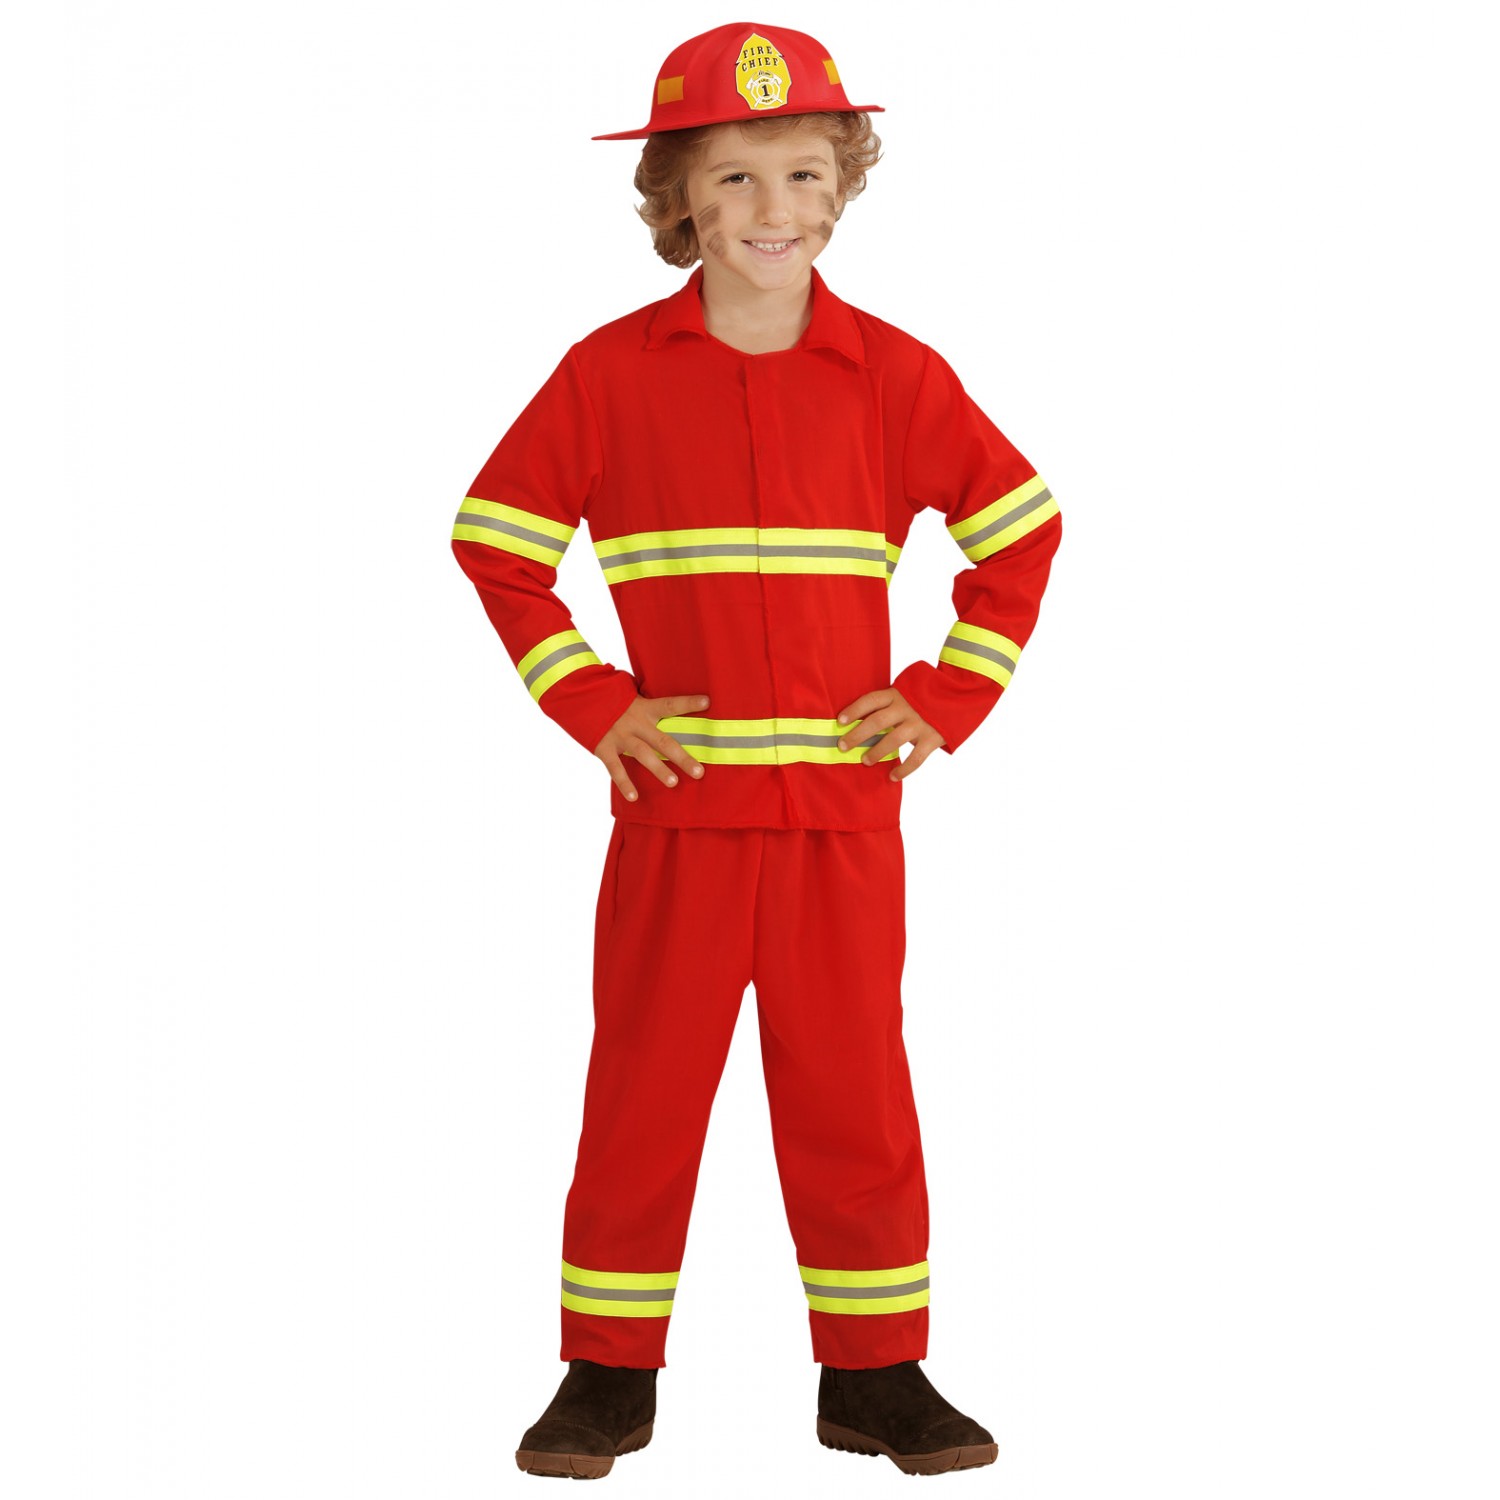 Costume pompier enfant